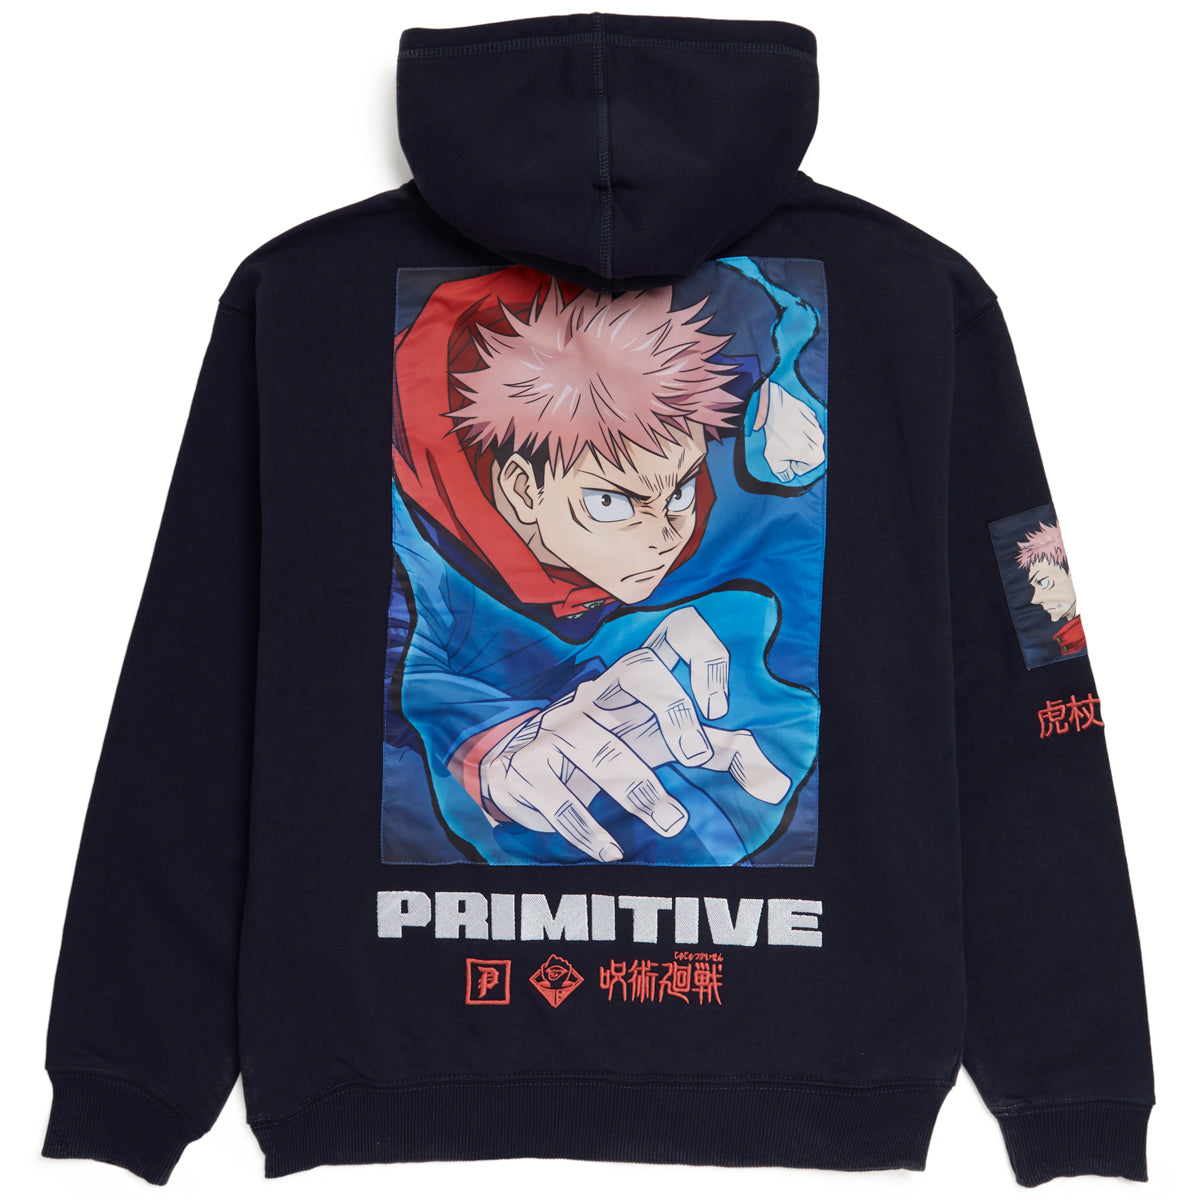 Naruto Shippuden Primitive Anime Hoodie, White, M | eBay